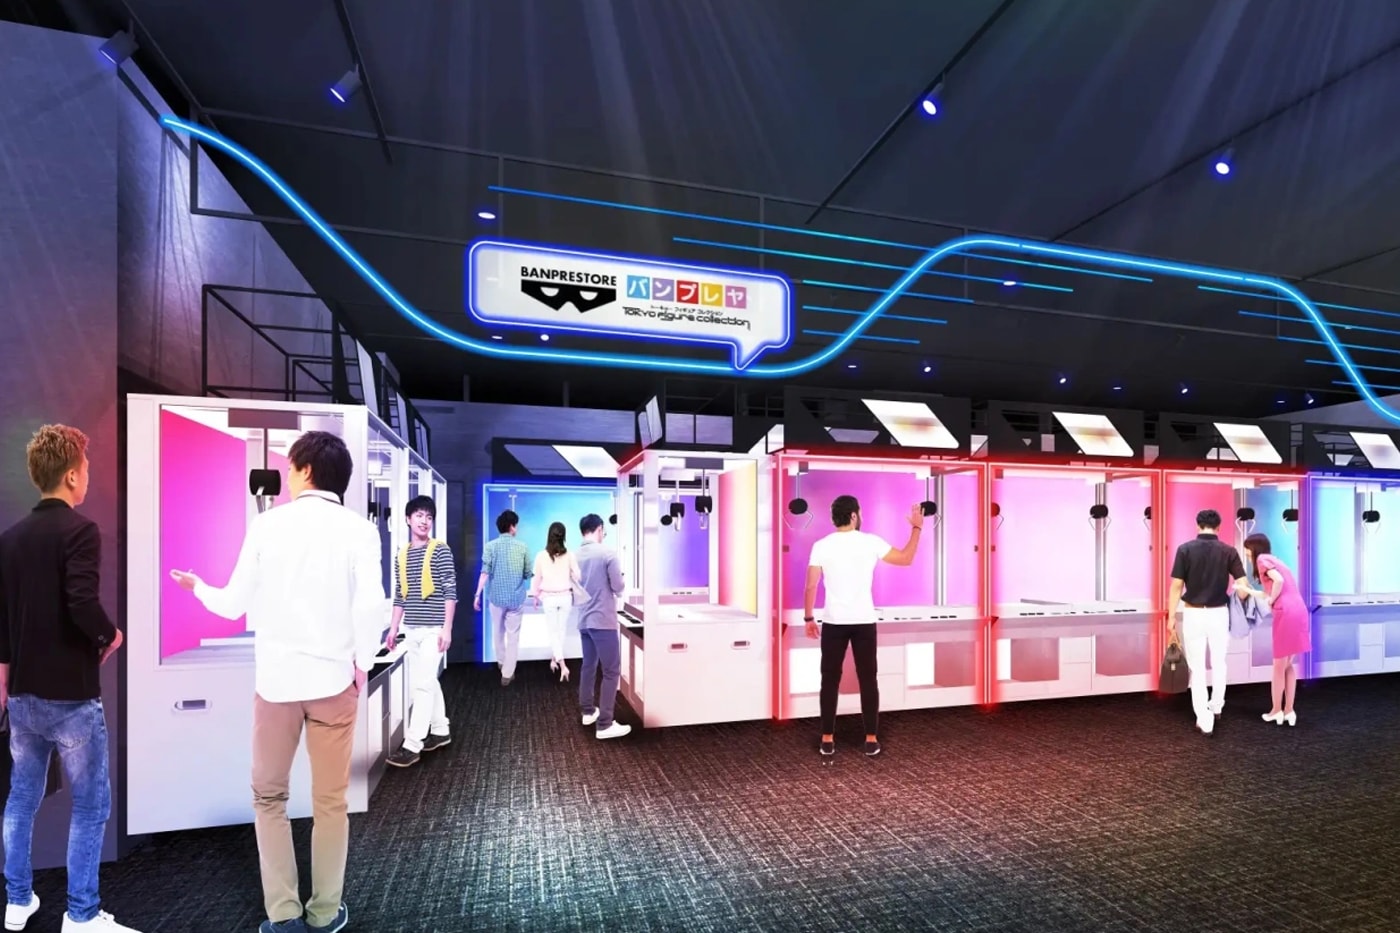 Bandai Namco Shinjuku Kabukicho Arcade Bar Opening Info Tokyo